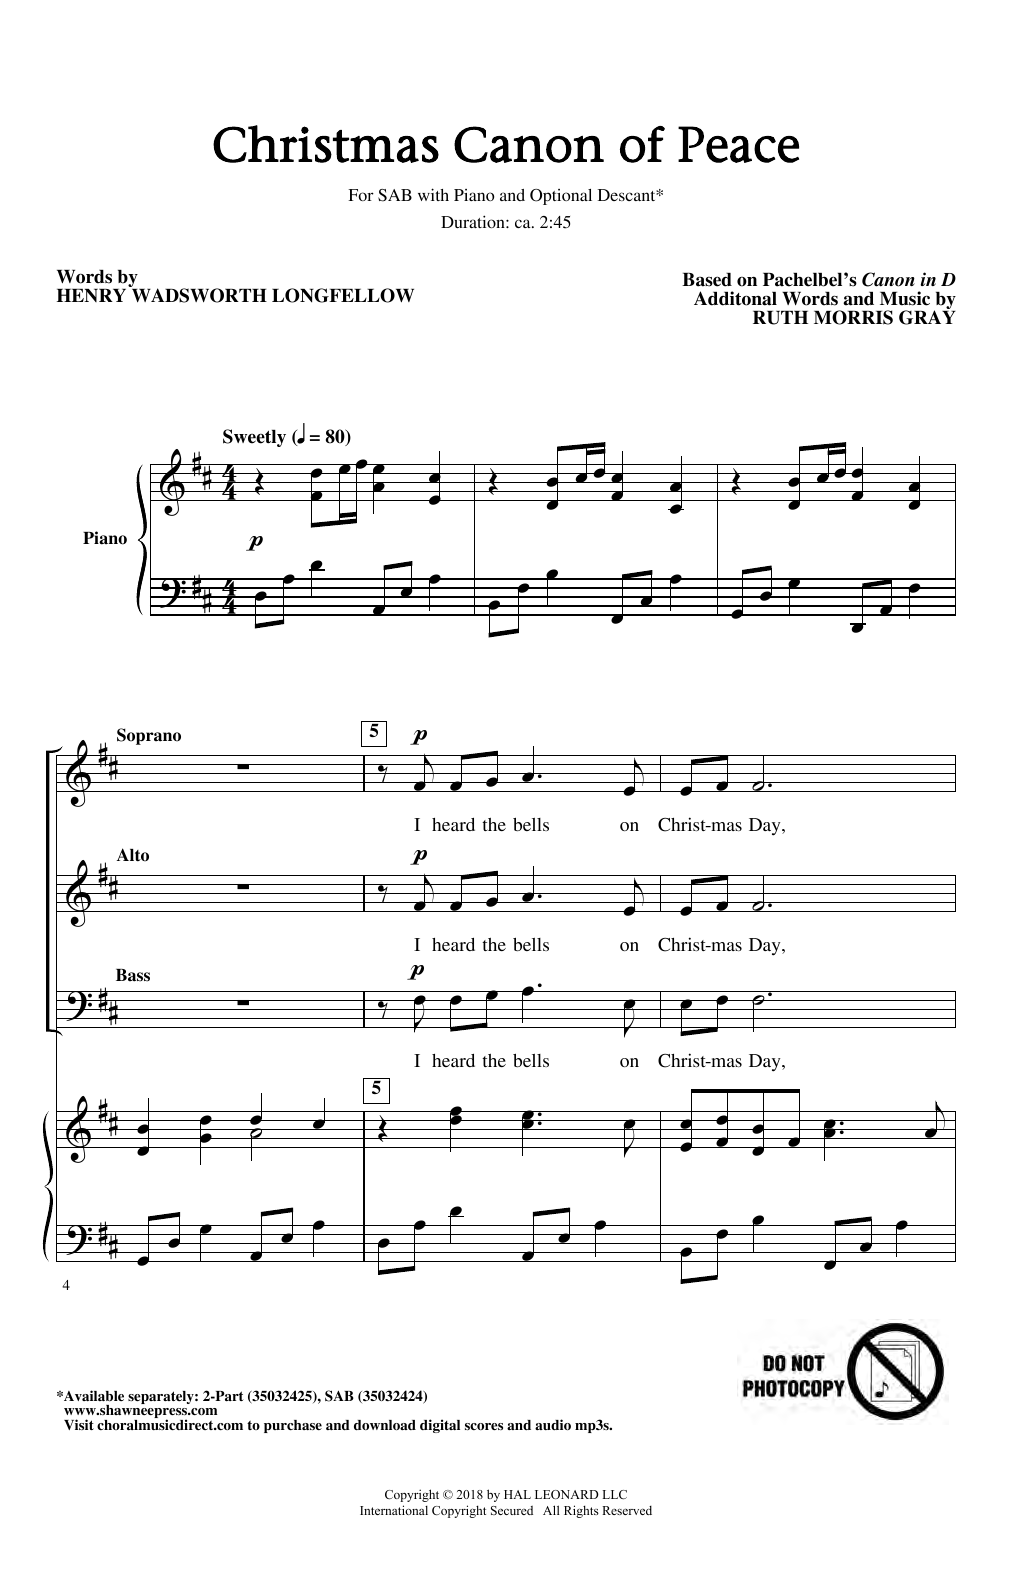 Johann Pachelbel Christmas Canon Of Peace (arr. Ruth Morris Gray) Sheet Music Notes & Chords for SAB Choir - Download or Print PDF